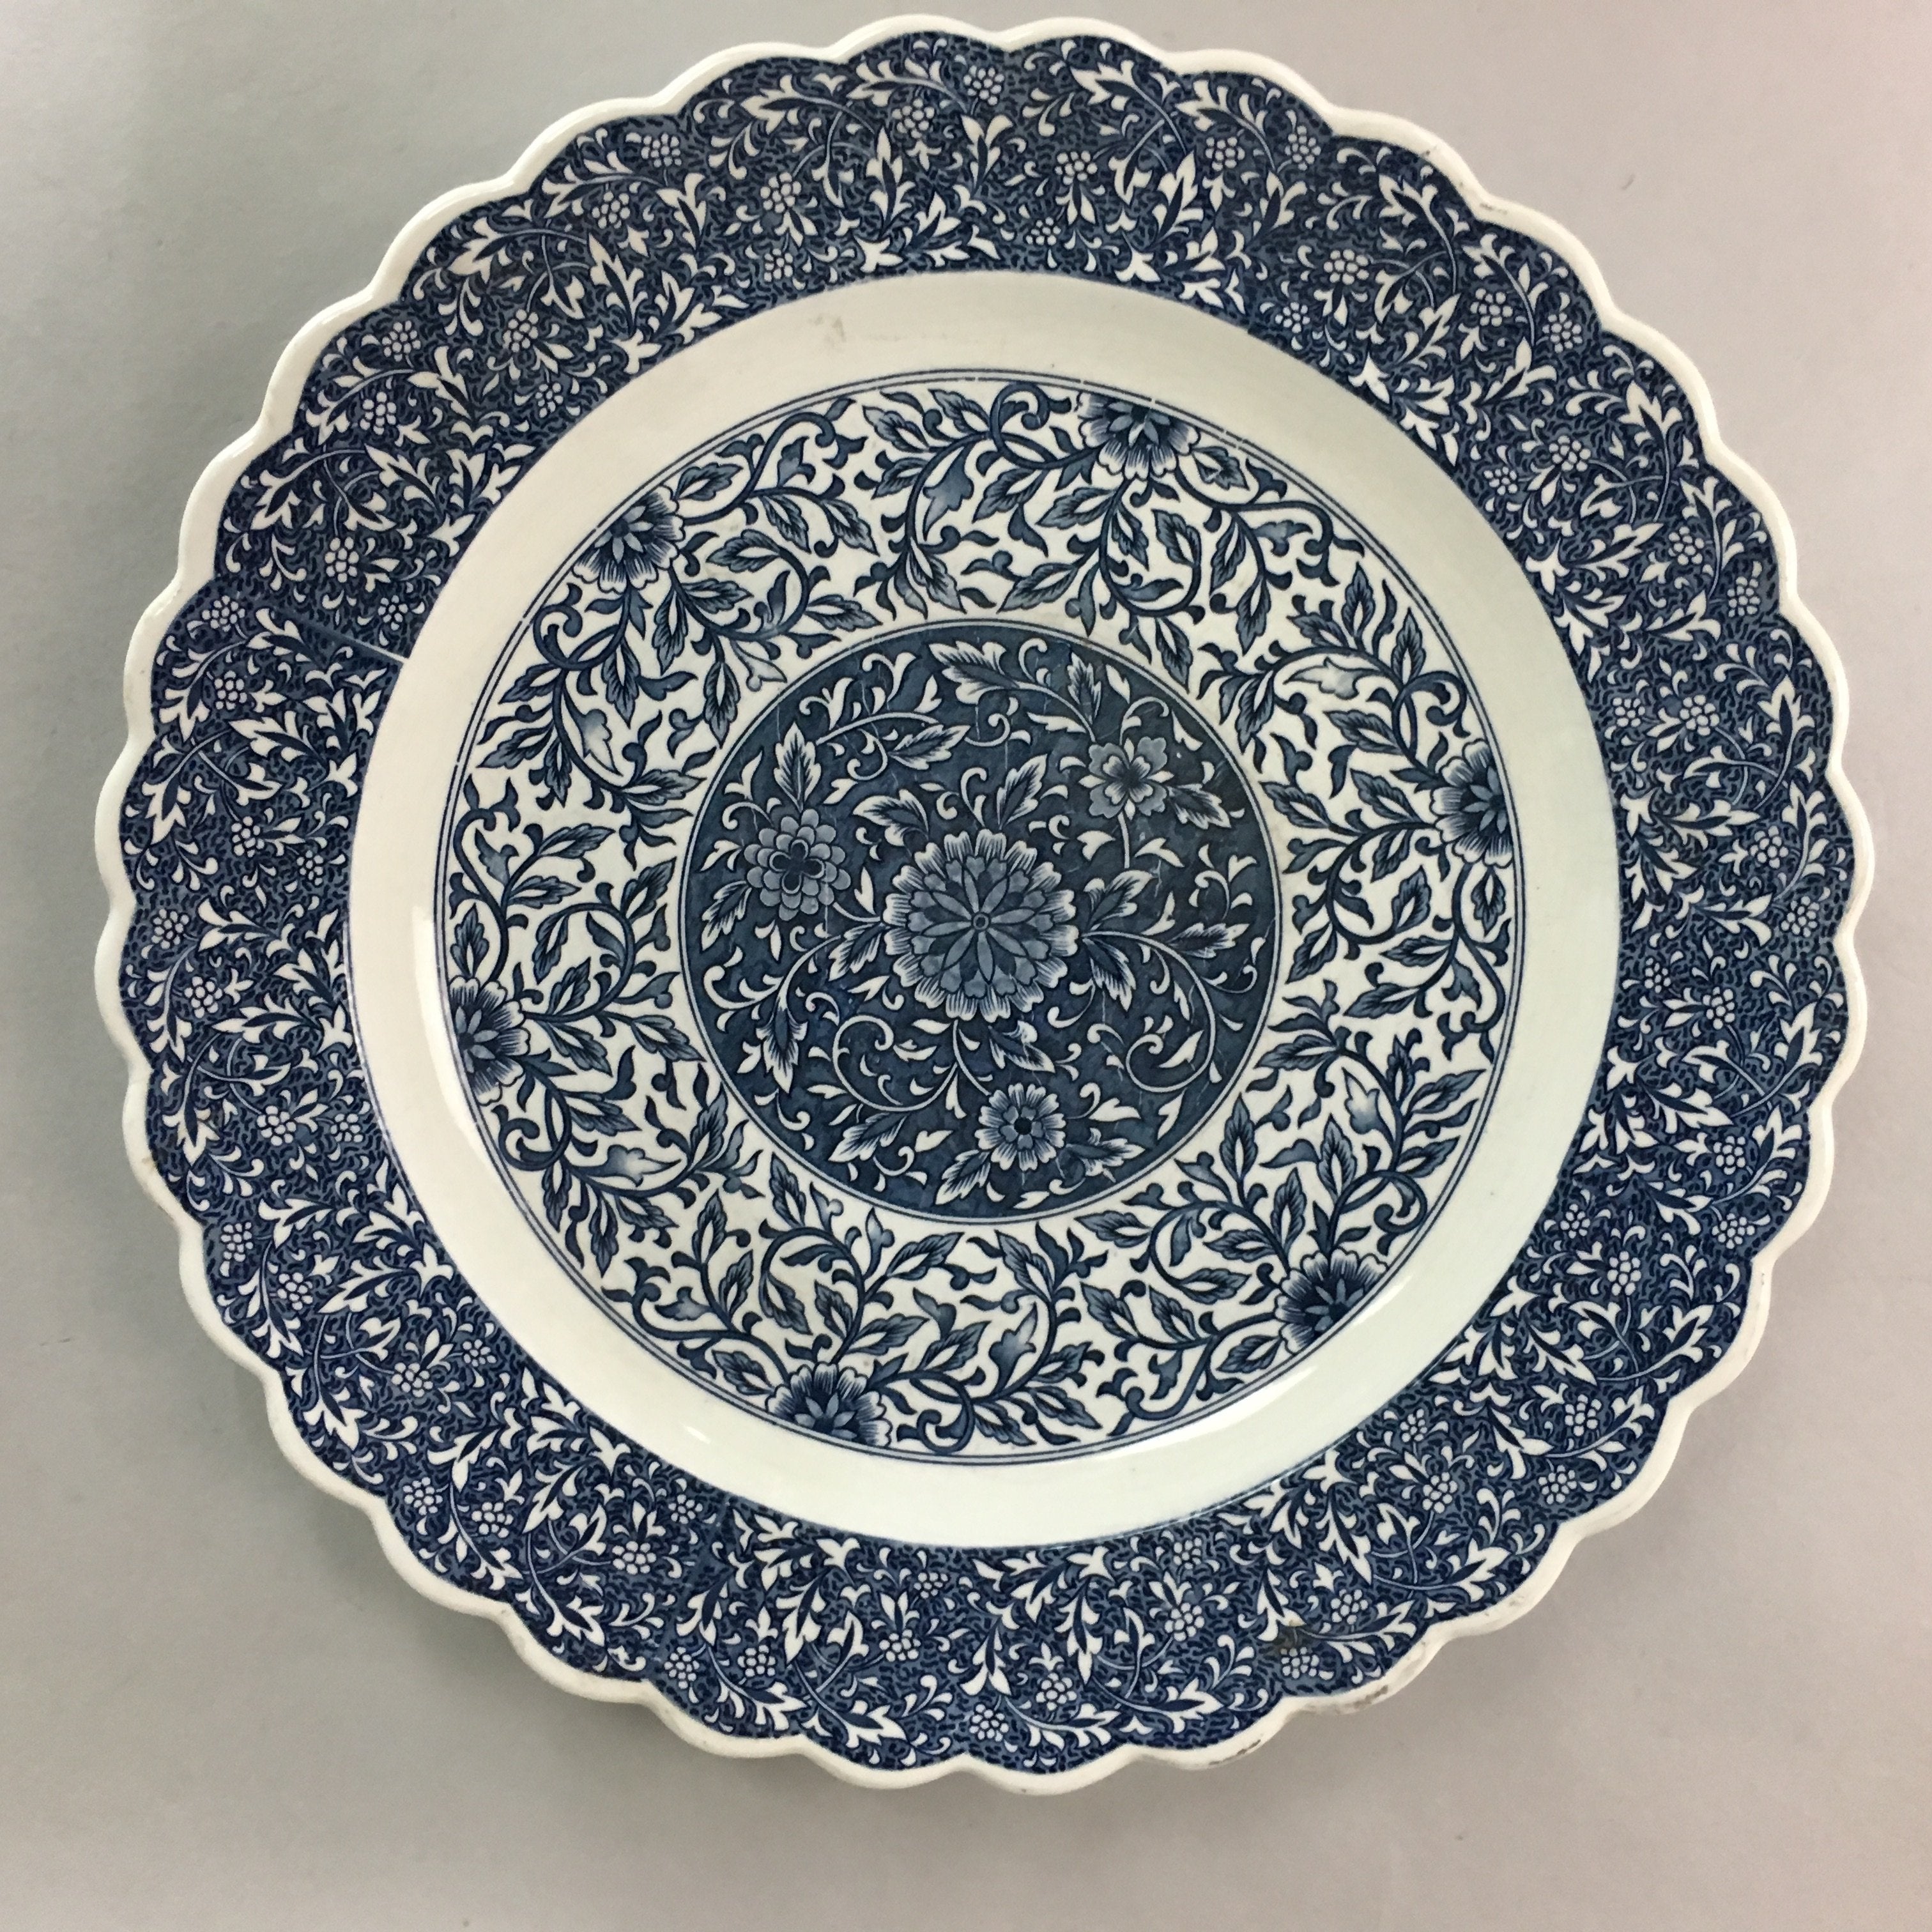 Japanese Porcelain Serving Plate Charger Vtg Centerpiece Floral Blue White PT806